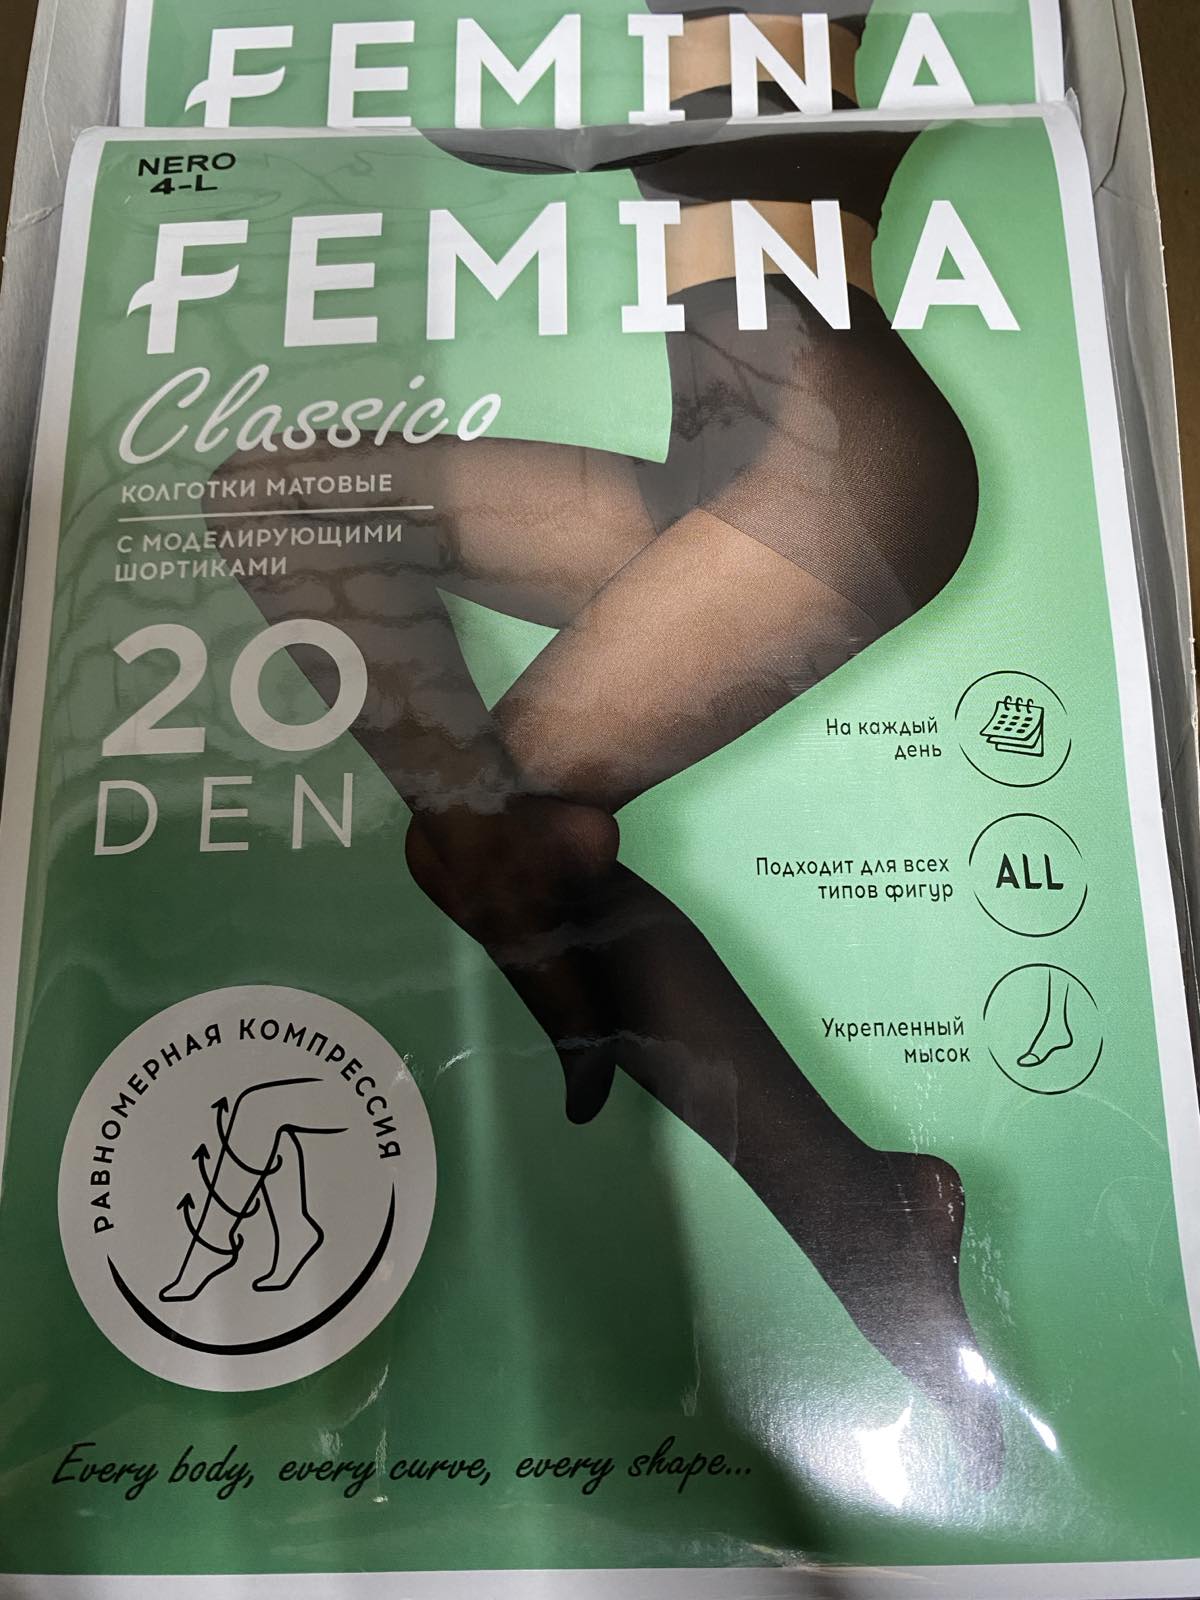 Колготки 20 ден 4 nero с шортиками FEMINA NEW CLASSICO (6/6)